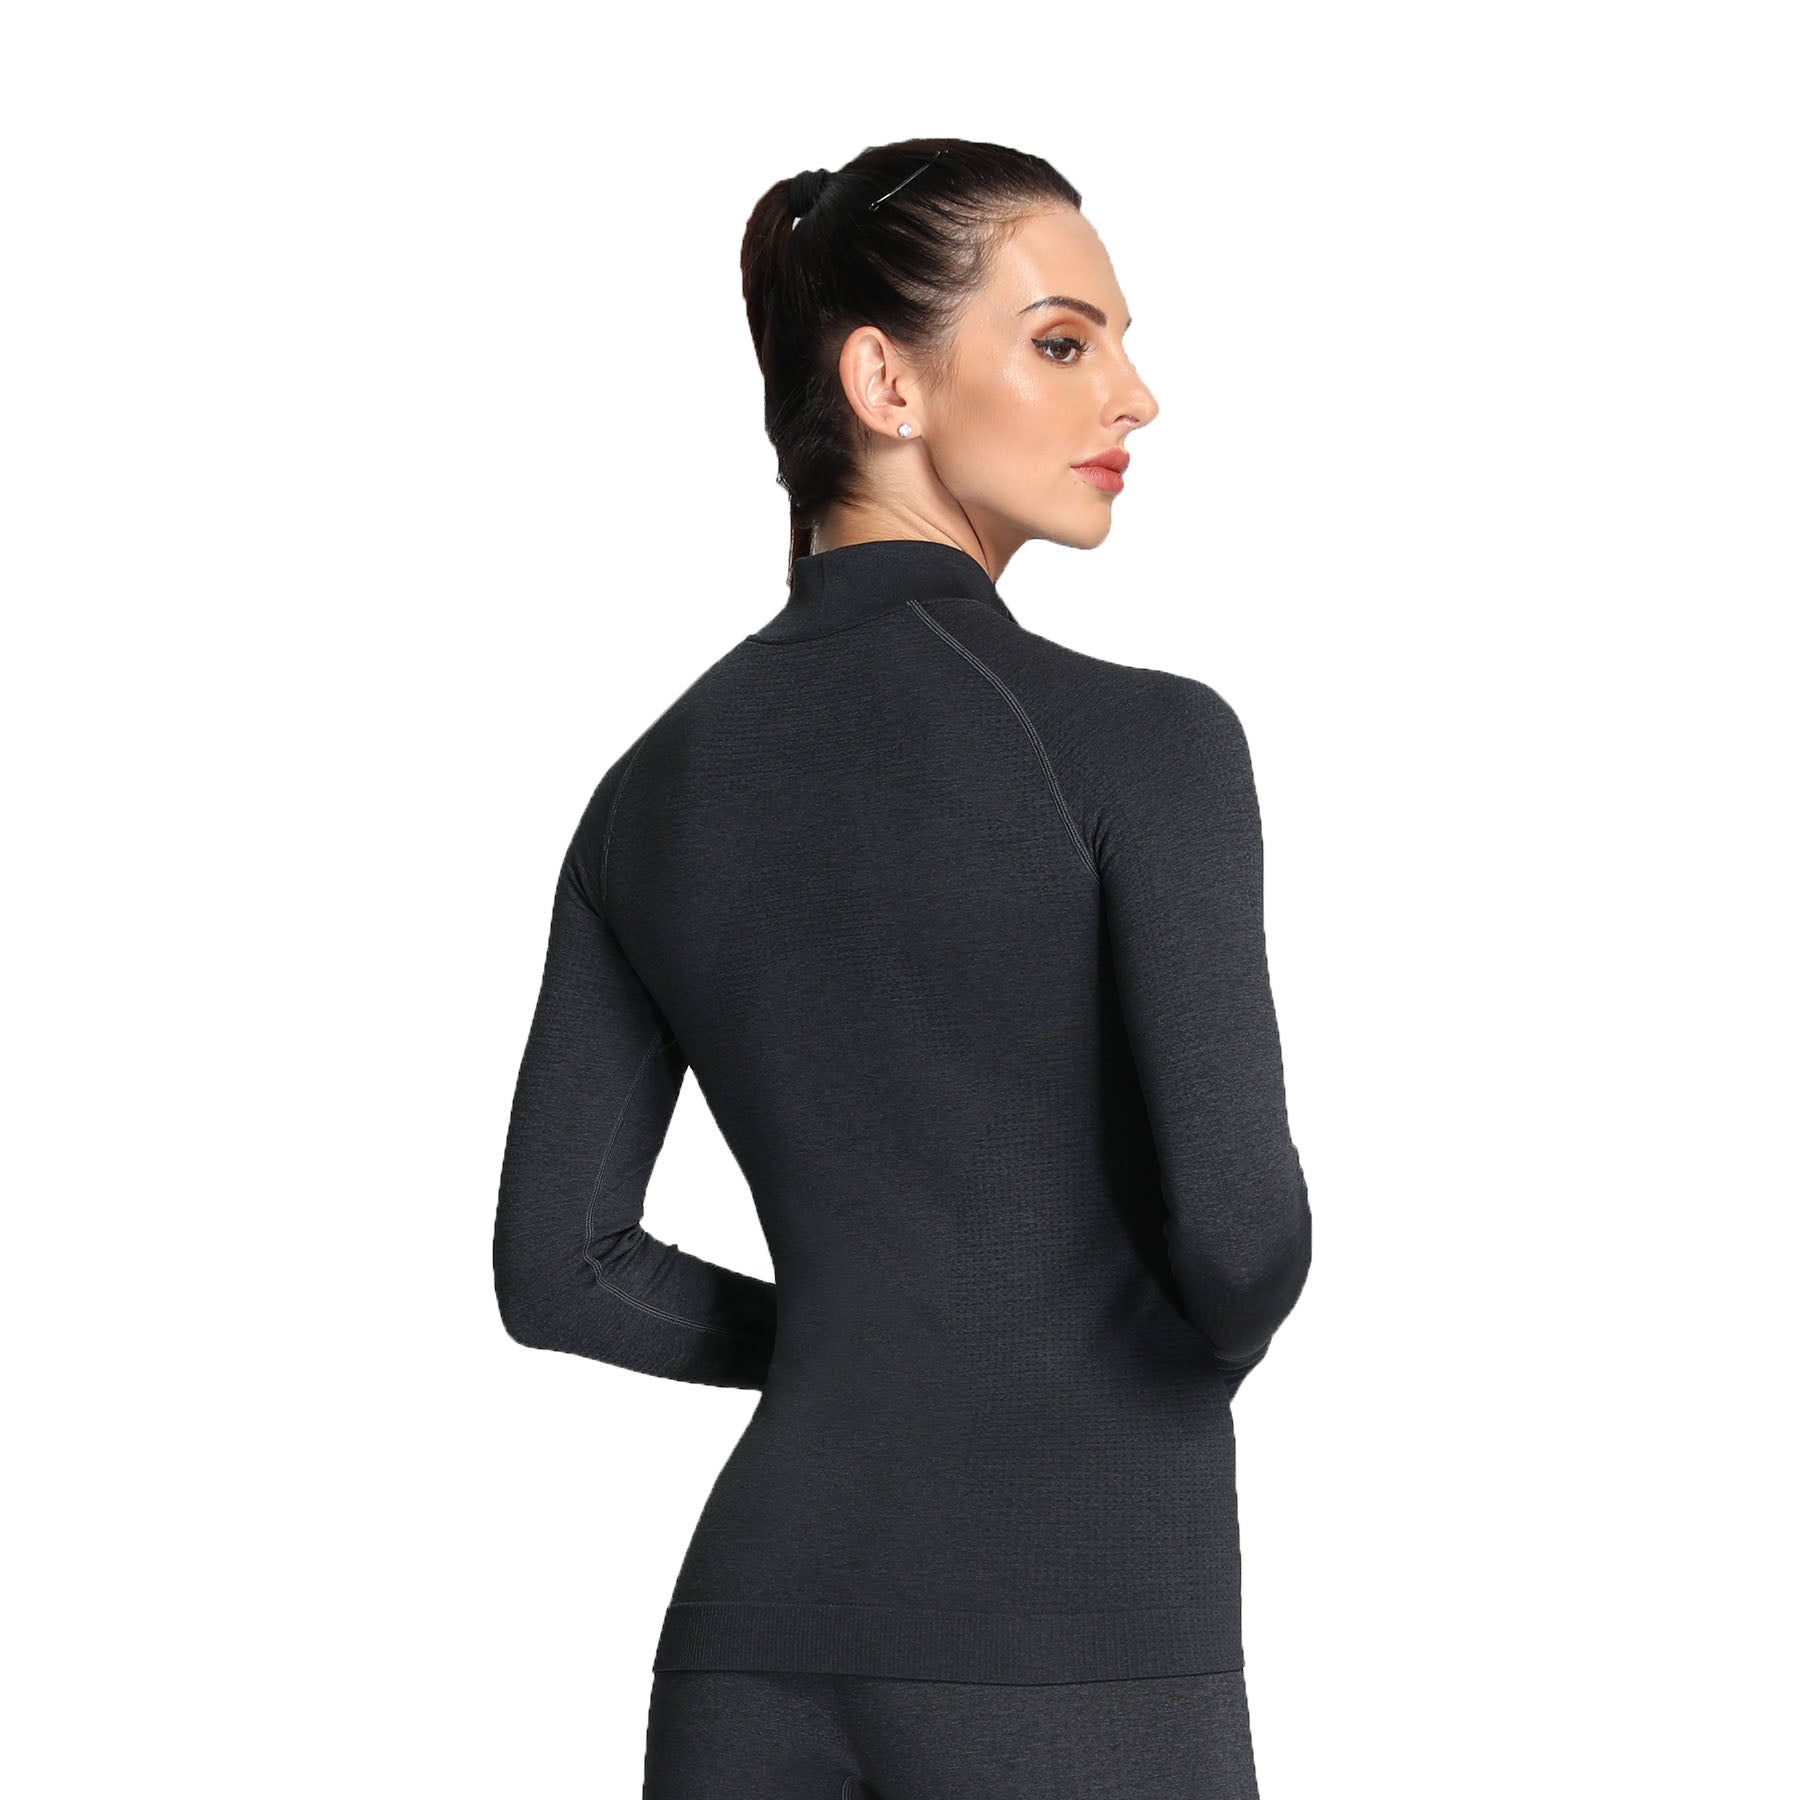 Aoxjox Women's Vital Long Sleeve Quarter Zip Pullover